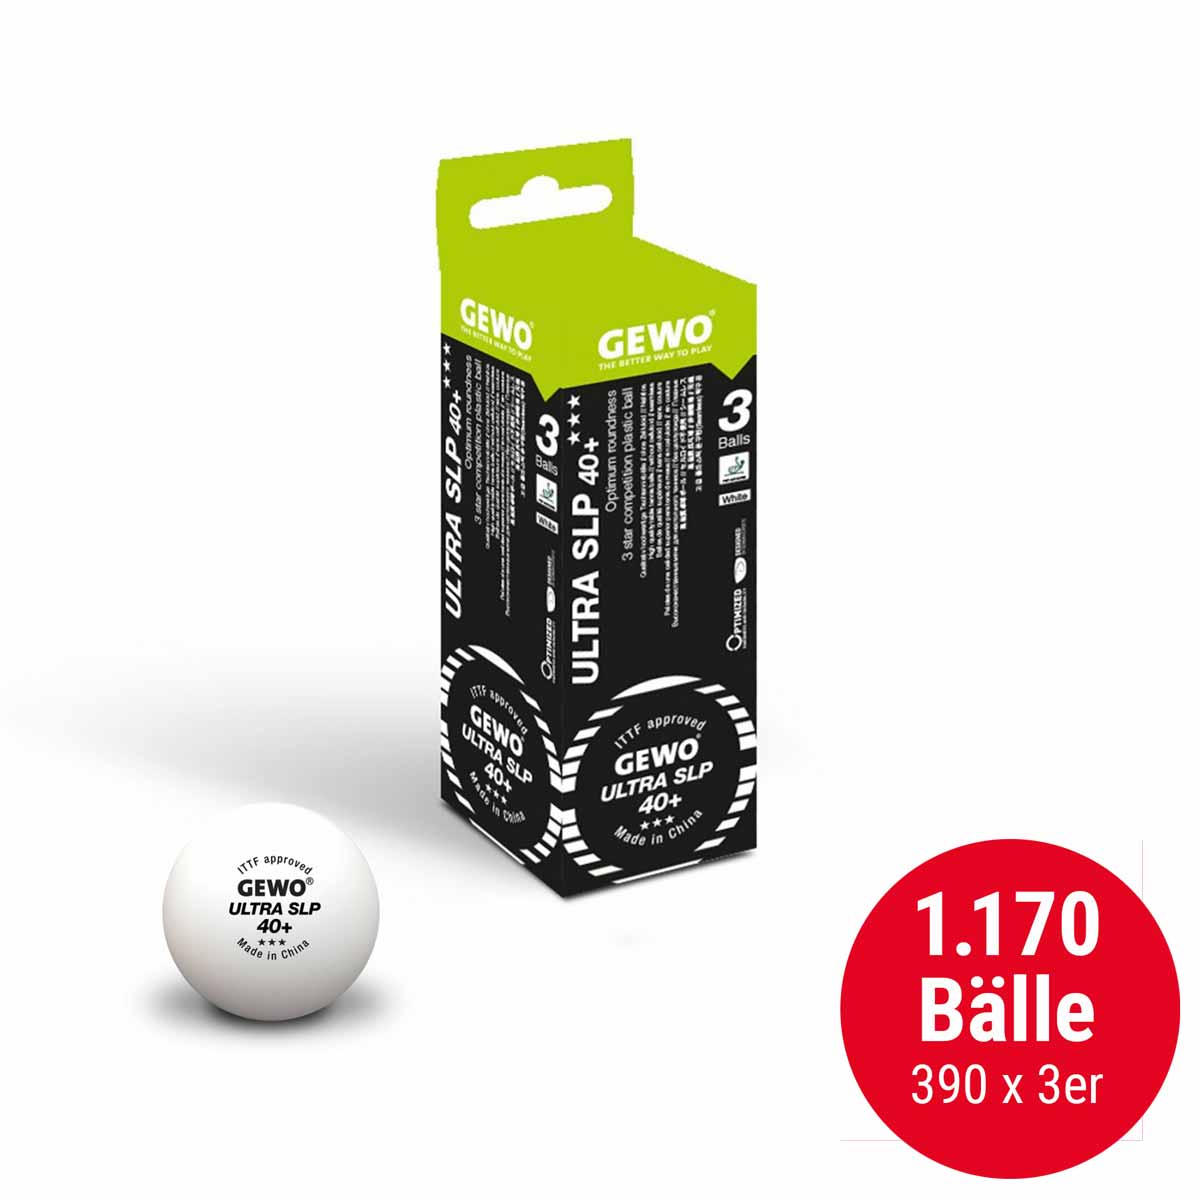 GEWO Ball Ultra SLP 40+ *** 390 x 3er white